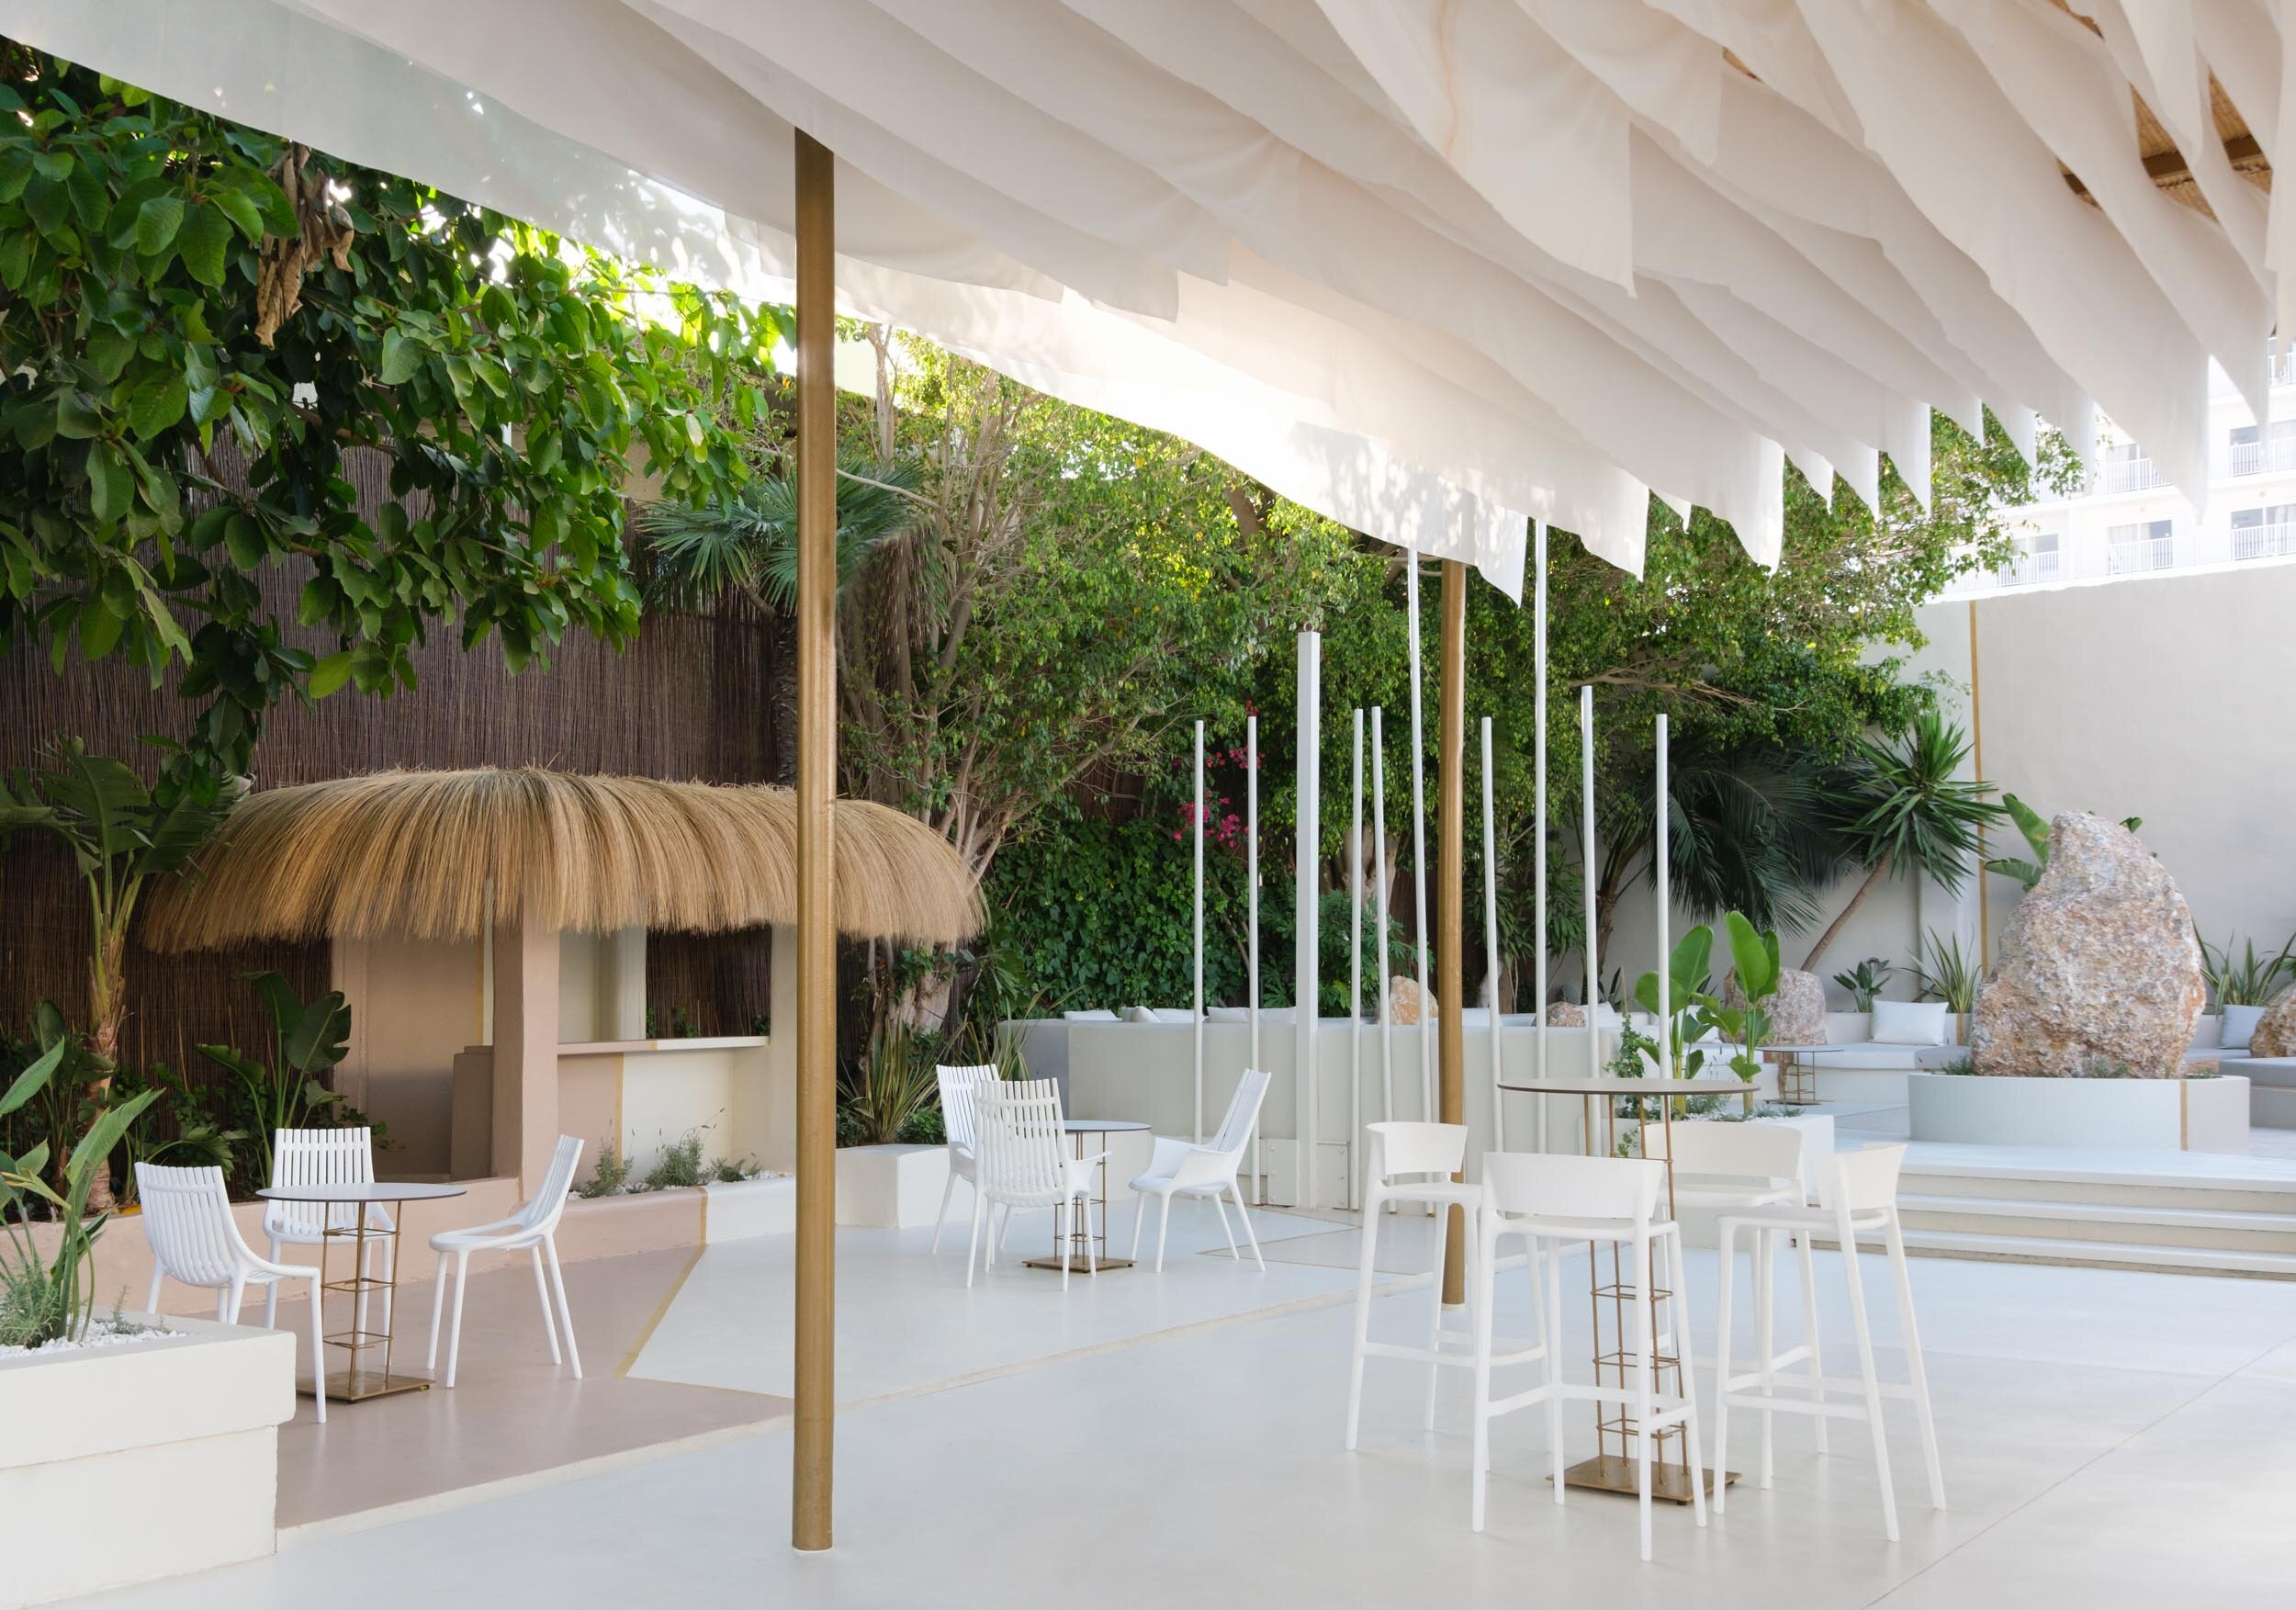 Arturo-Lauren-art-sanchez-architecture-hospitality-interior-photographer-mallorca-cocoa-restaurant-18.jpg